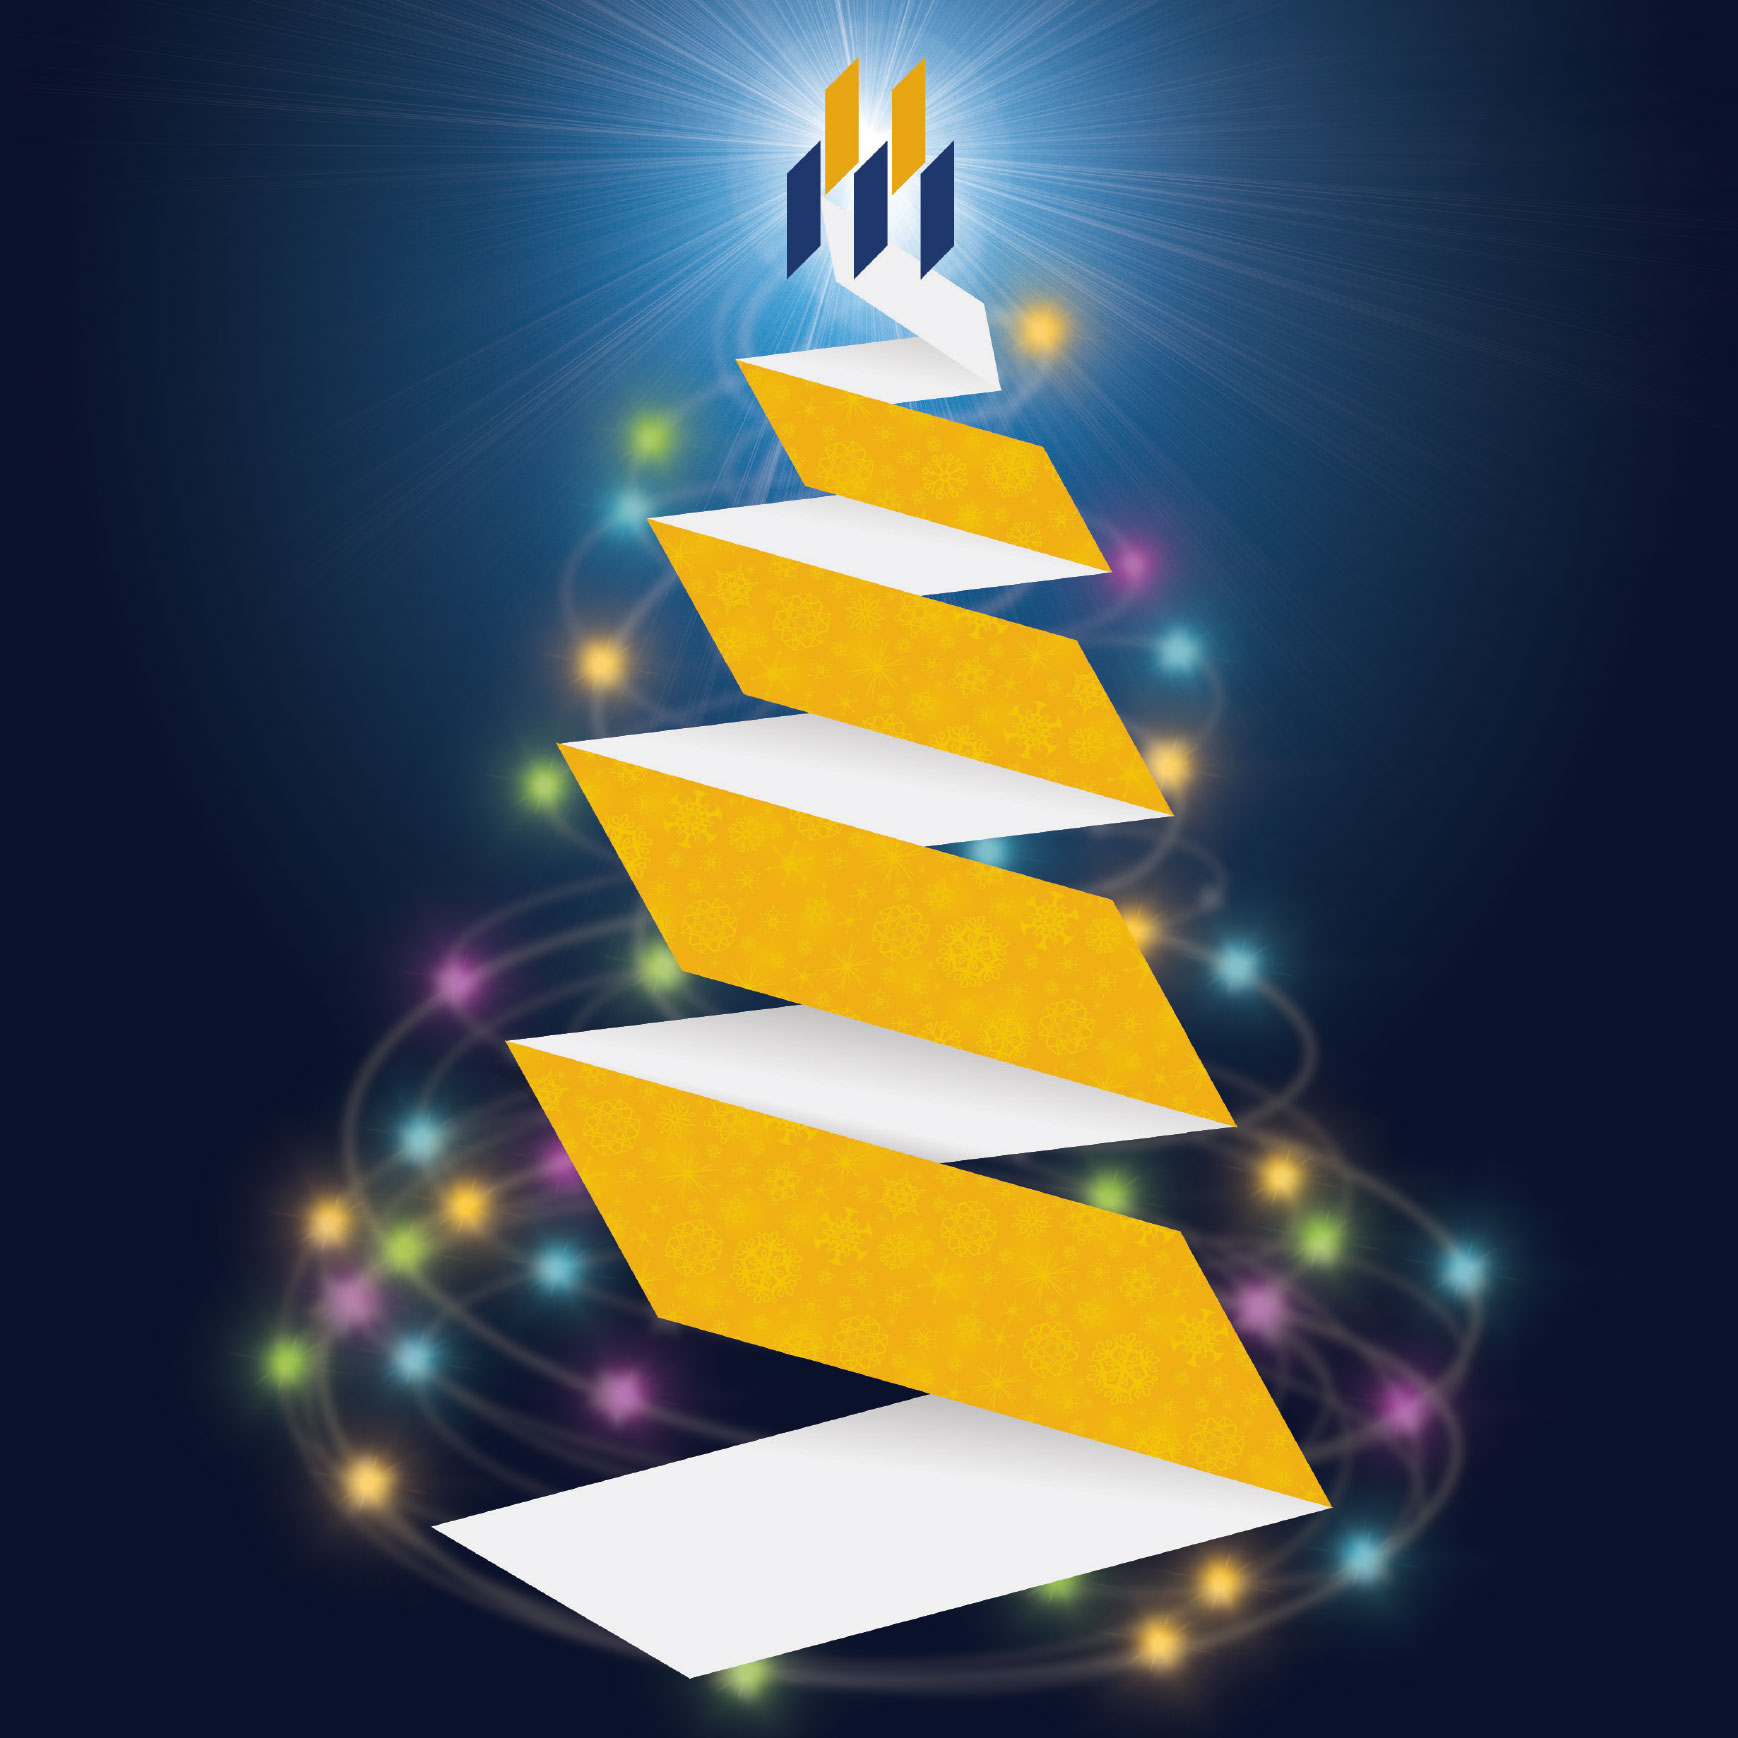 Andre Goguen Graphic Designer Umoncton Holiday Card Shiny Tree